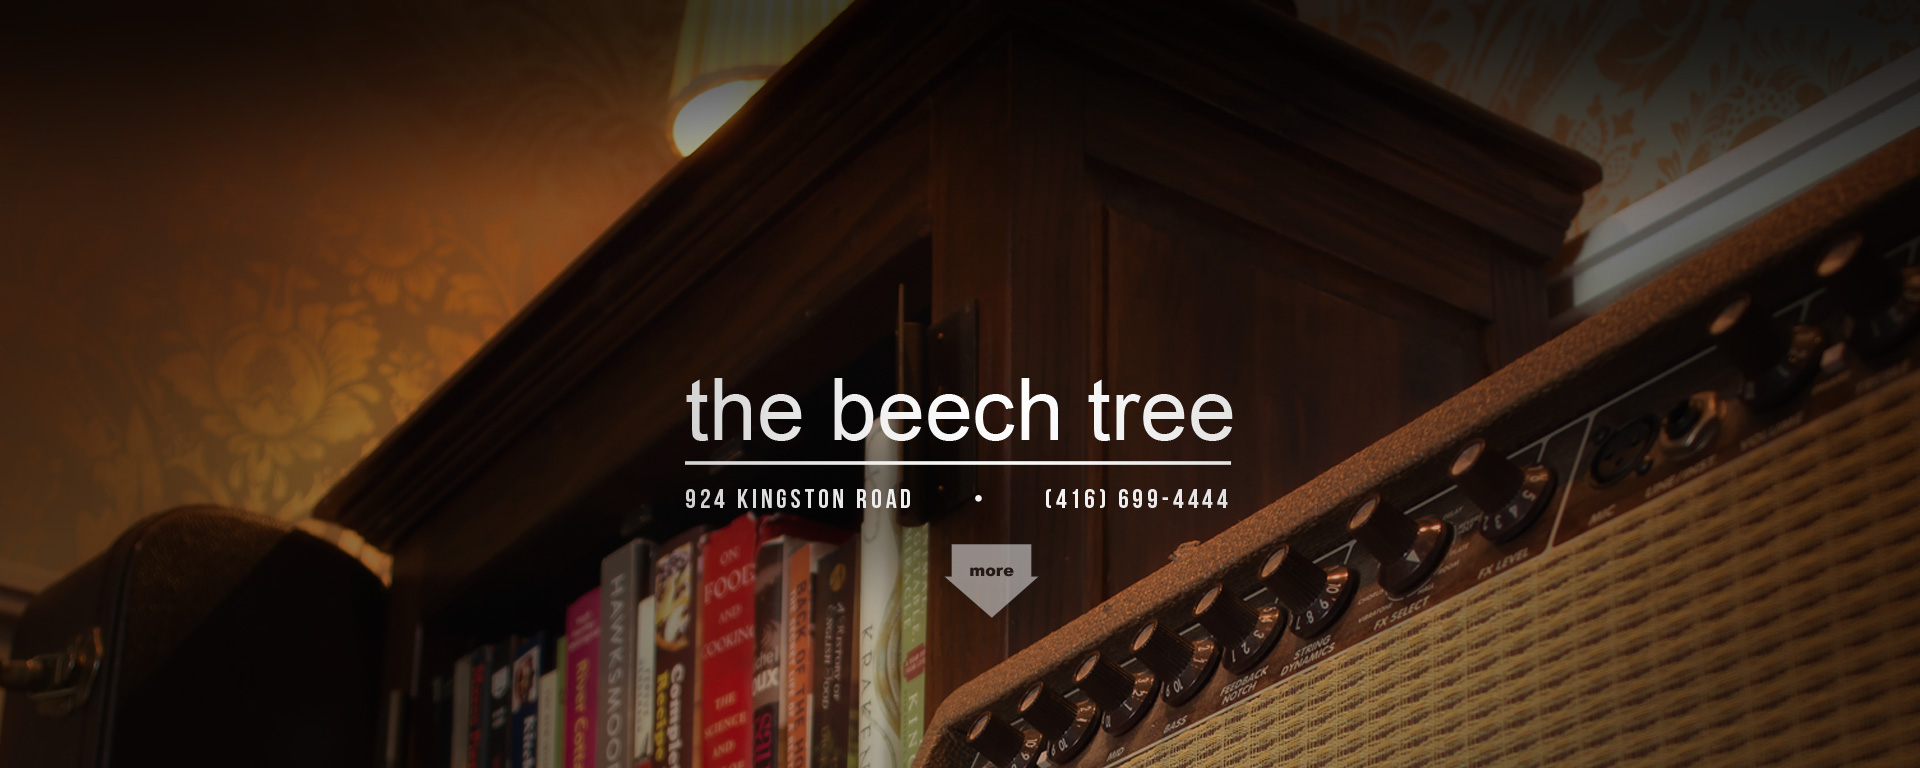 contact – the beech tree